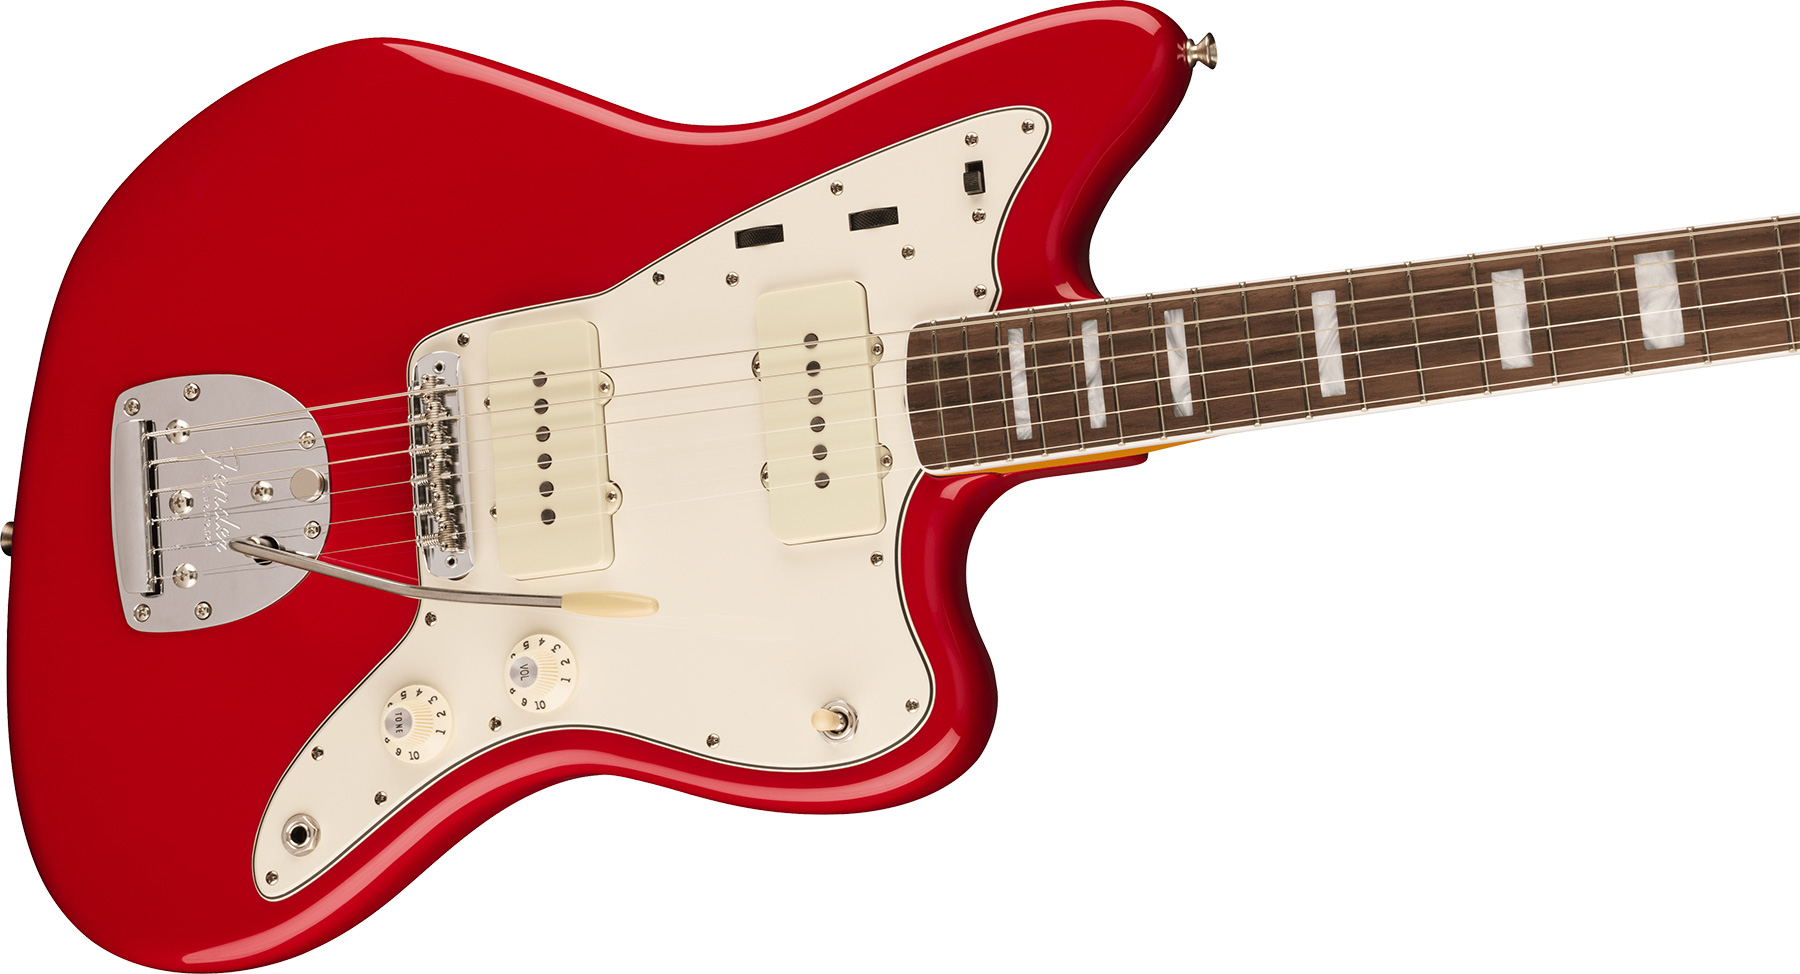 Fender Jazzmaster 1966 American Vintage Ii Usa Sh Trem Rw - Dakota Red - Retro rock electric guitar - Variation 2